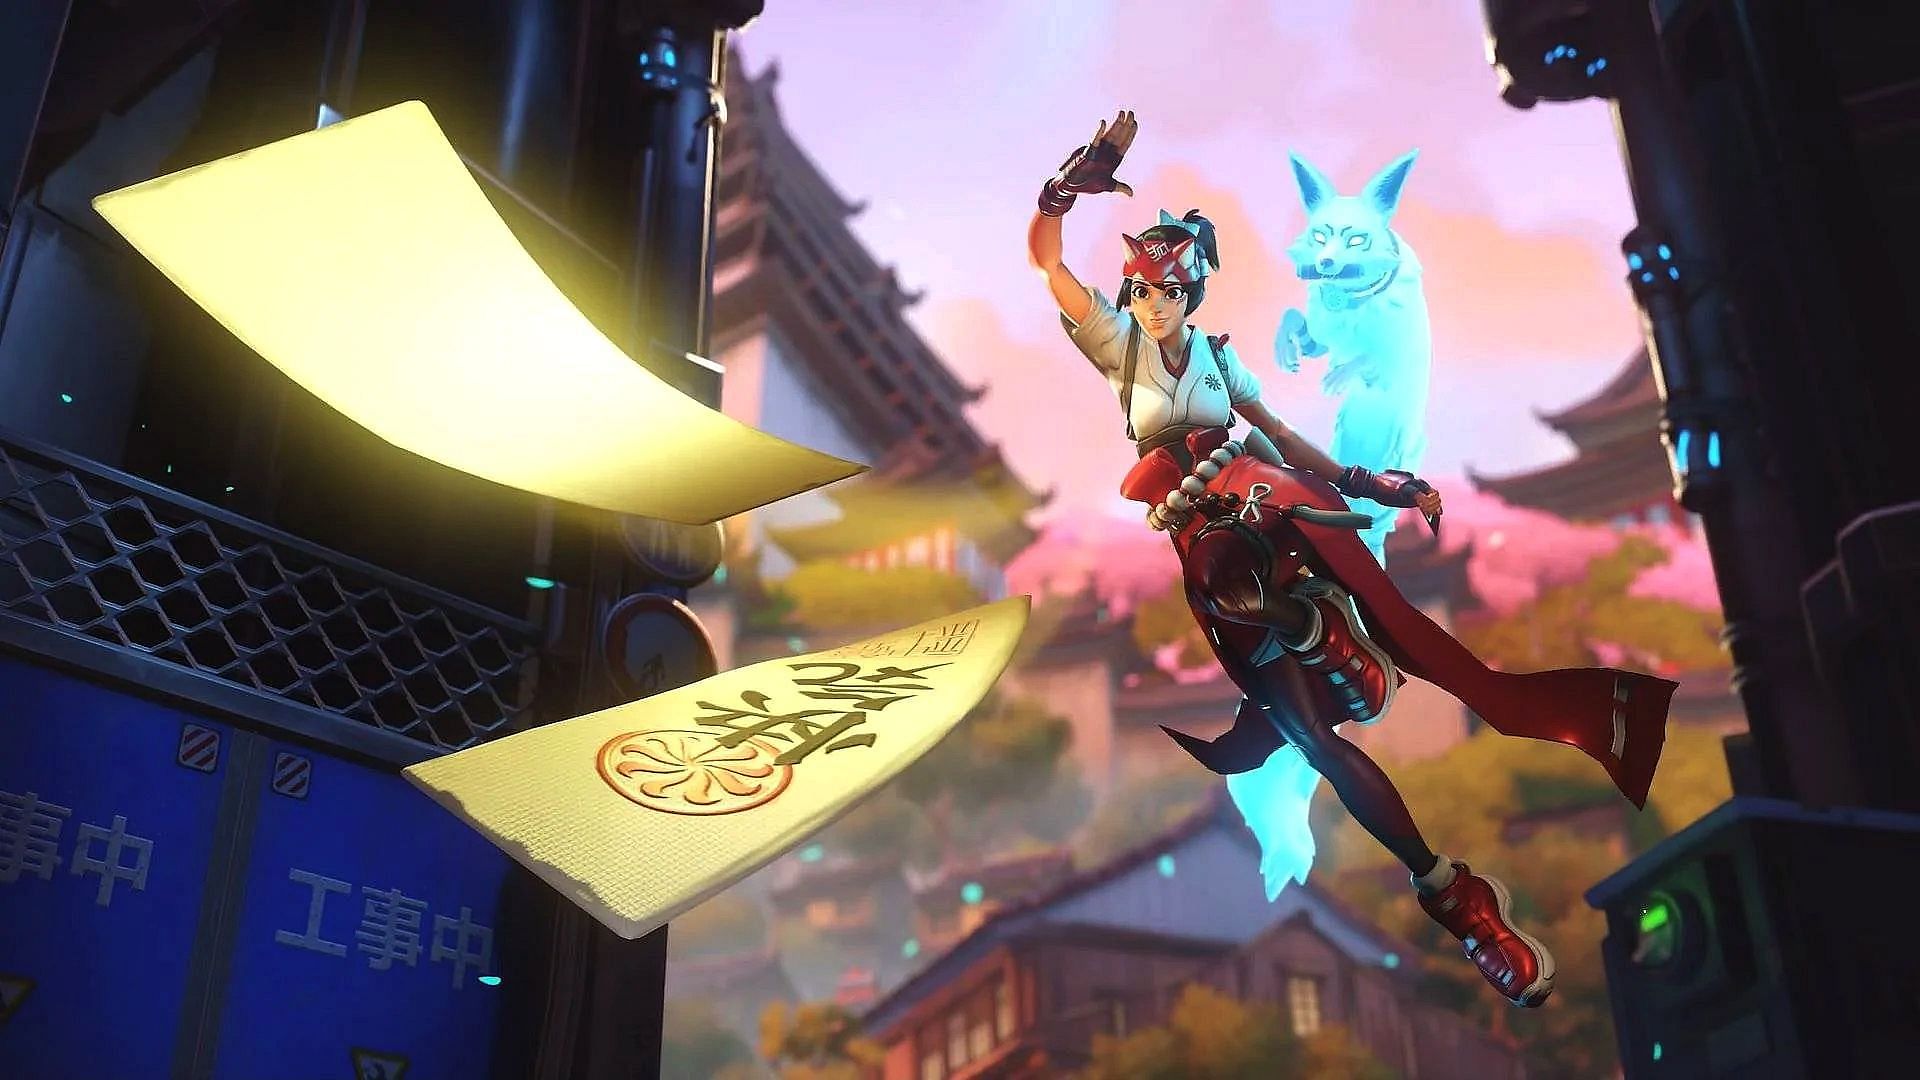 Kiriko drops into battle with her guardian fox spirit (Image via Blizzard)